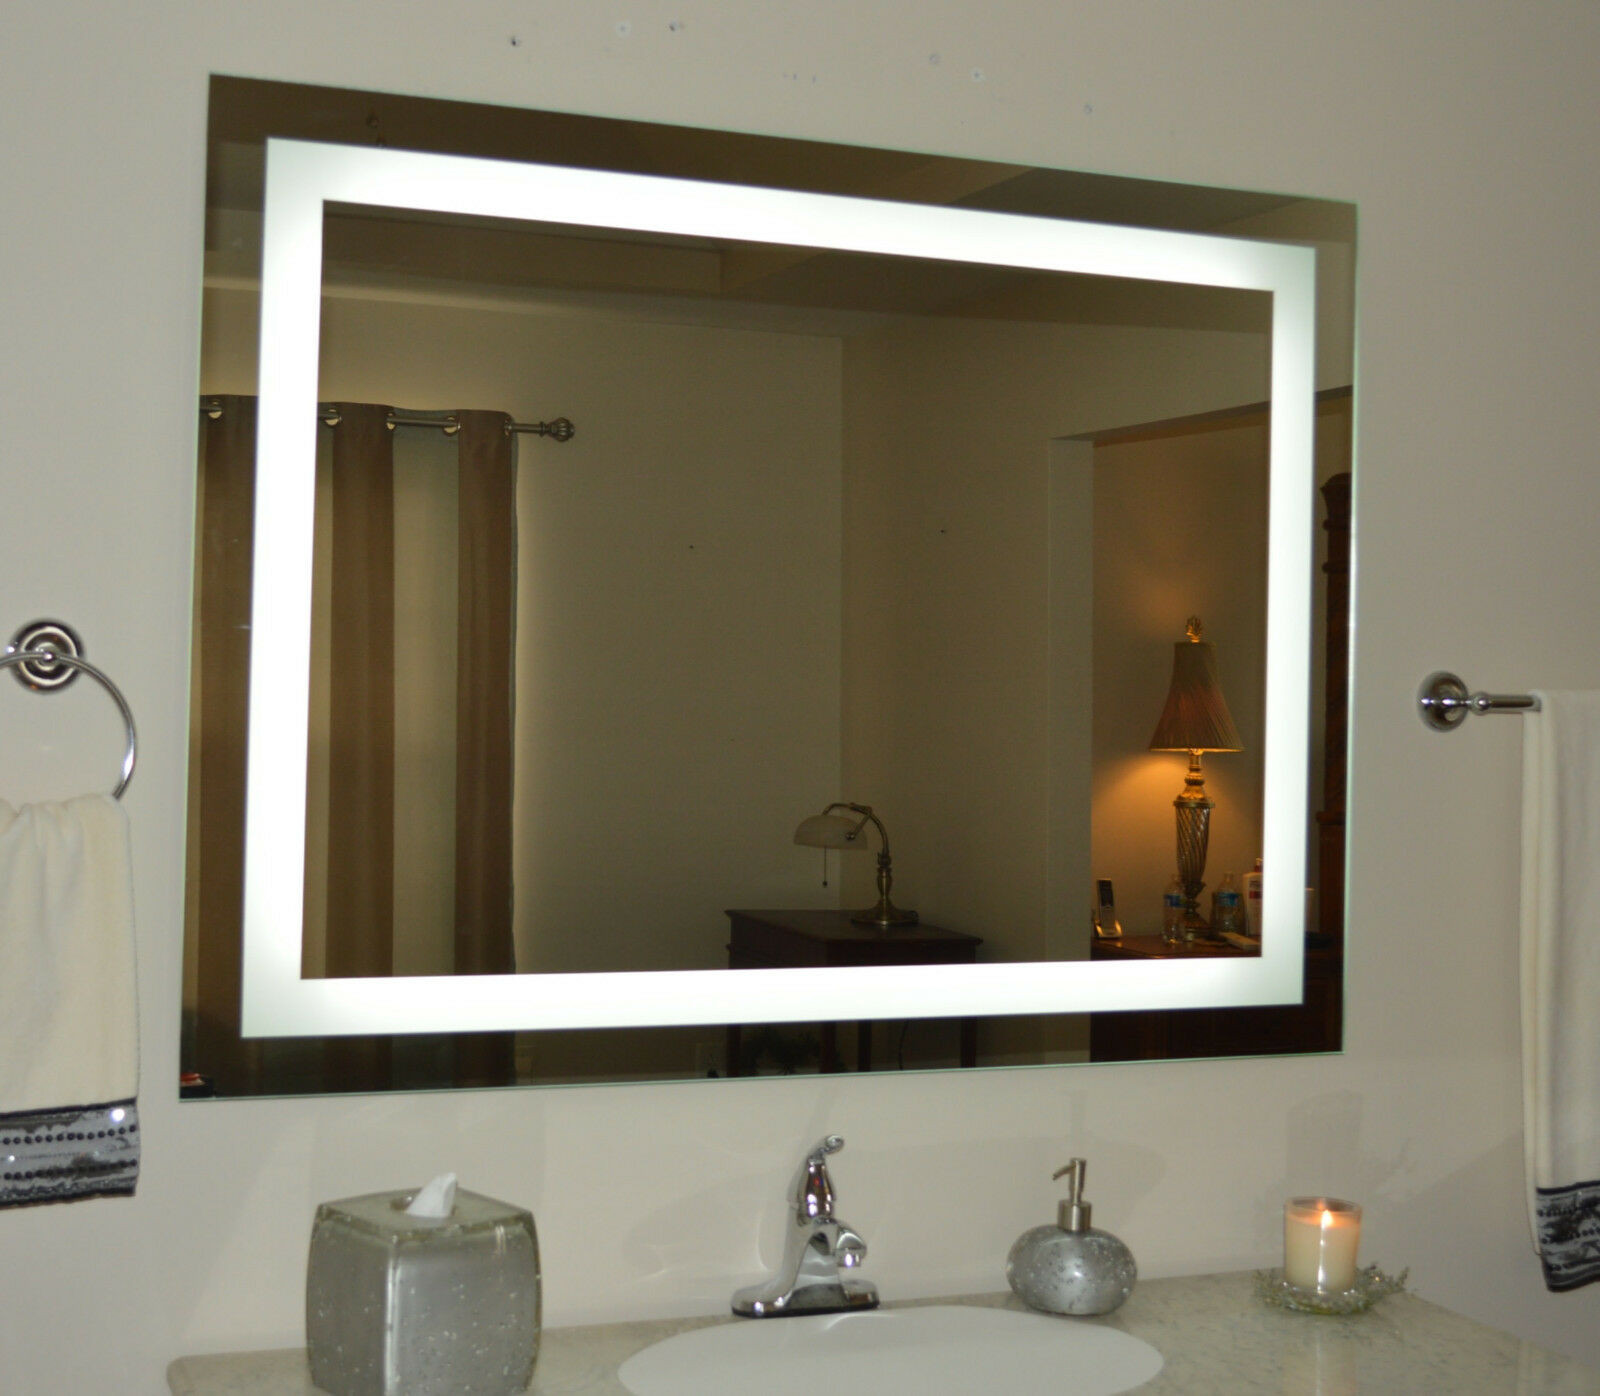 Lighted Bathroom Wall Mirror
 Lighted bathroom vanity mirror led wall mounted 48